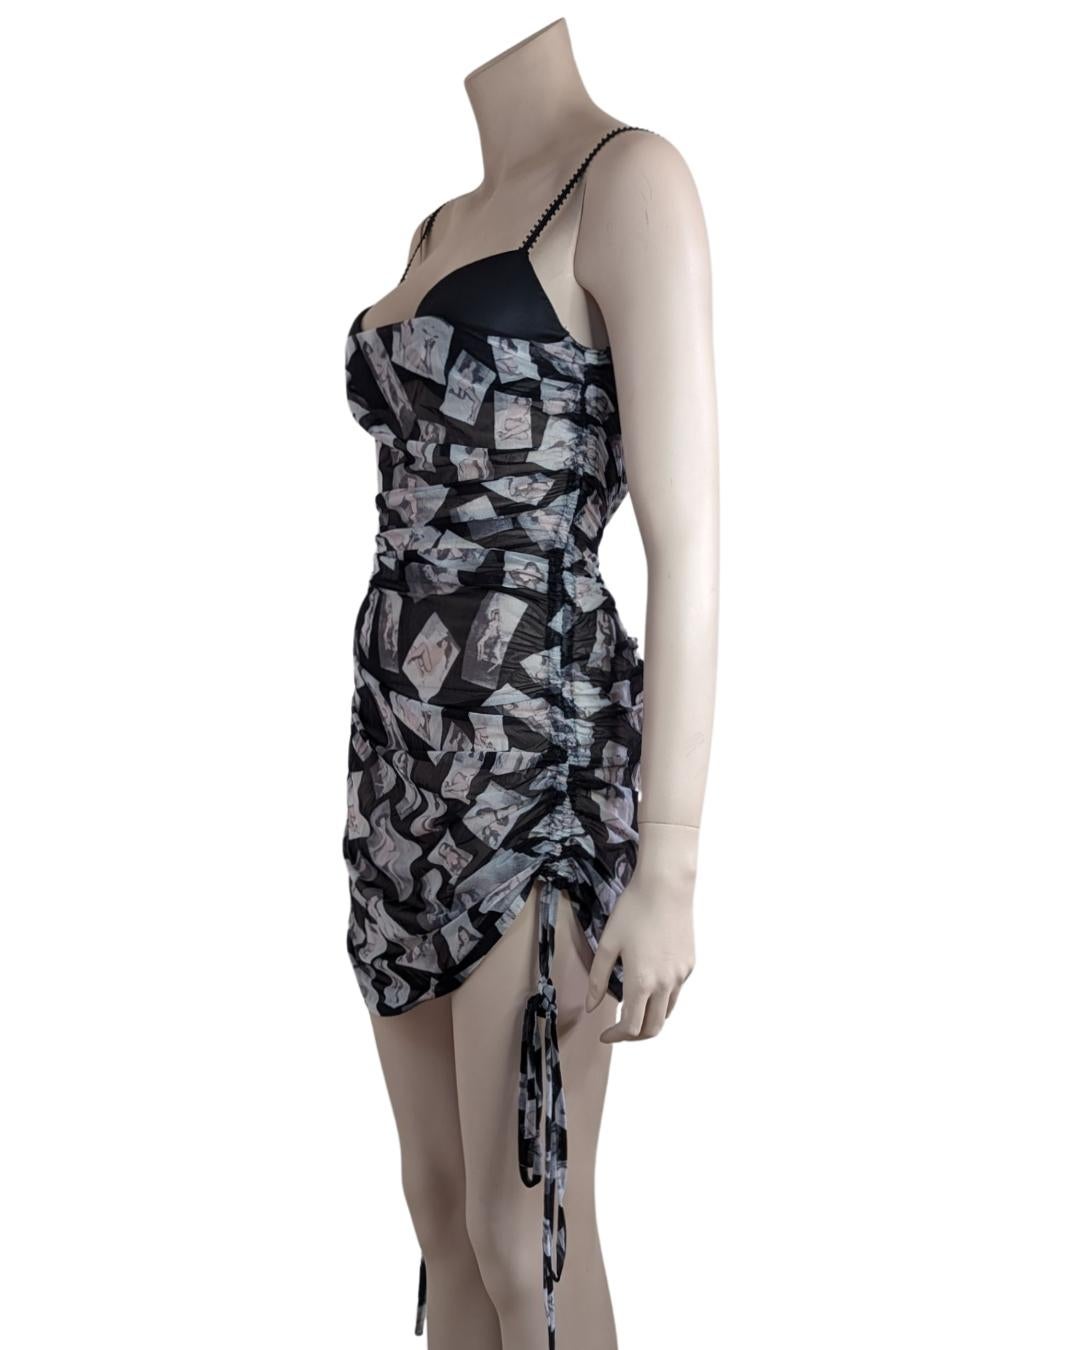 La Perla Black Label Bettie Page Mesh Dress In Excellent Condition For Sale In GOUVIEUX, FR